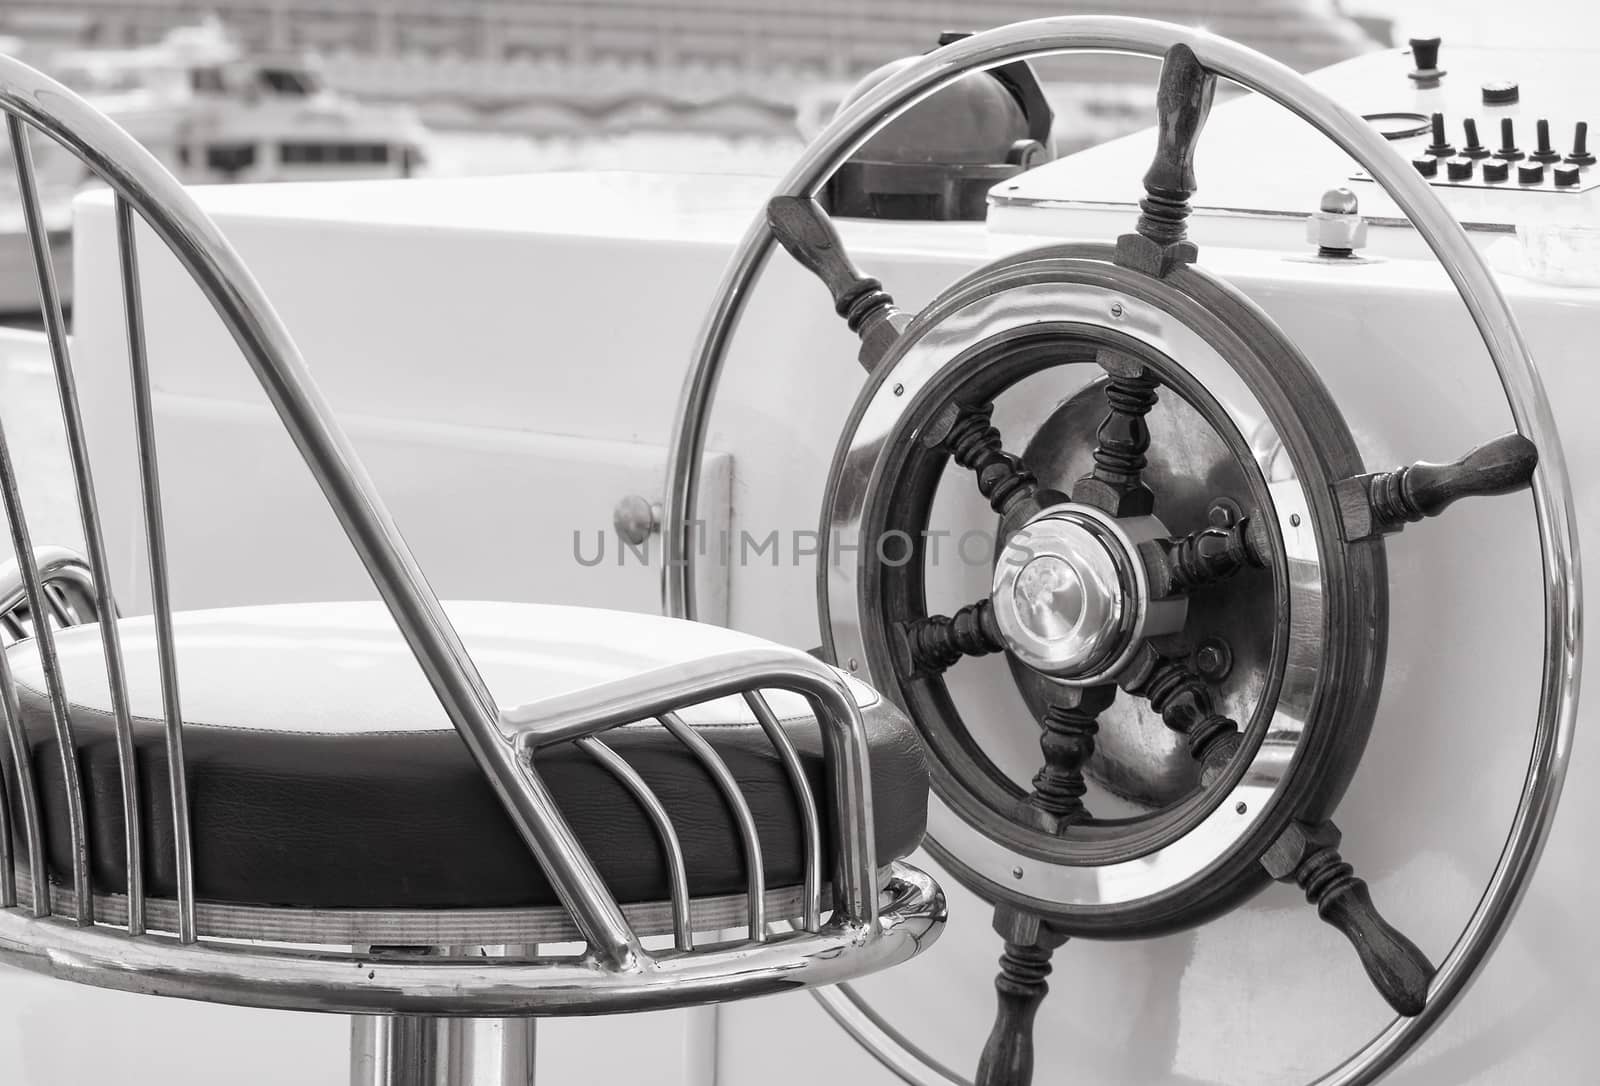 Yacht rudder in black and white by Brigida_Soriano